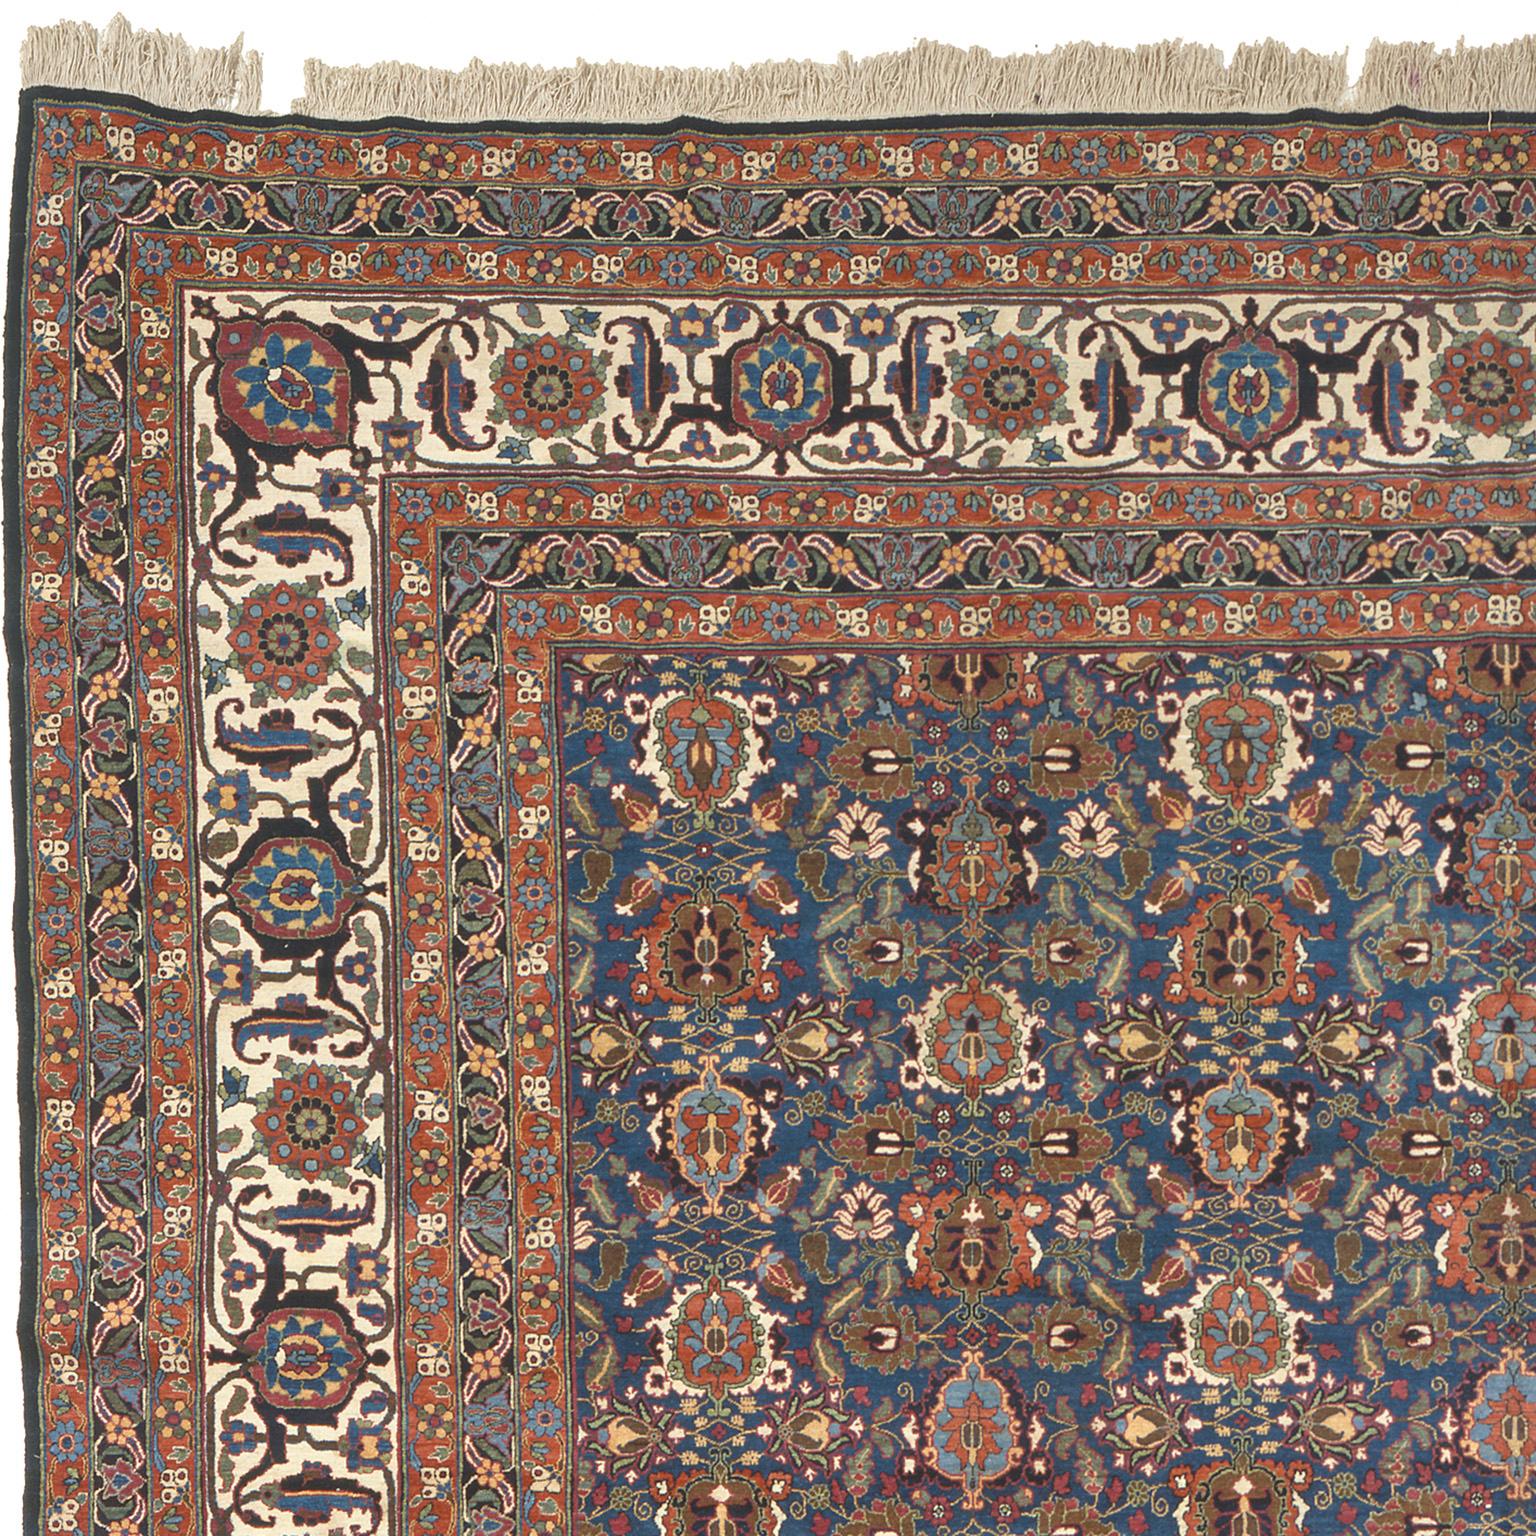 Persia ca. 1900
Measures: 17'3